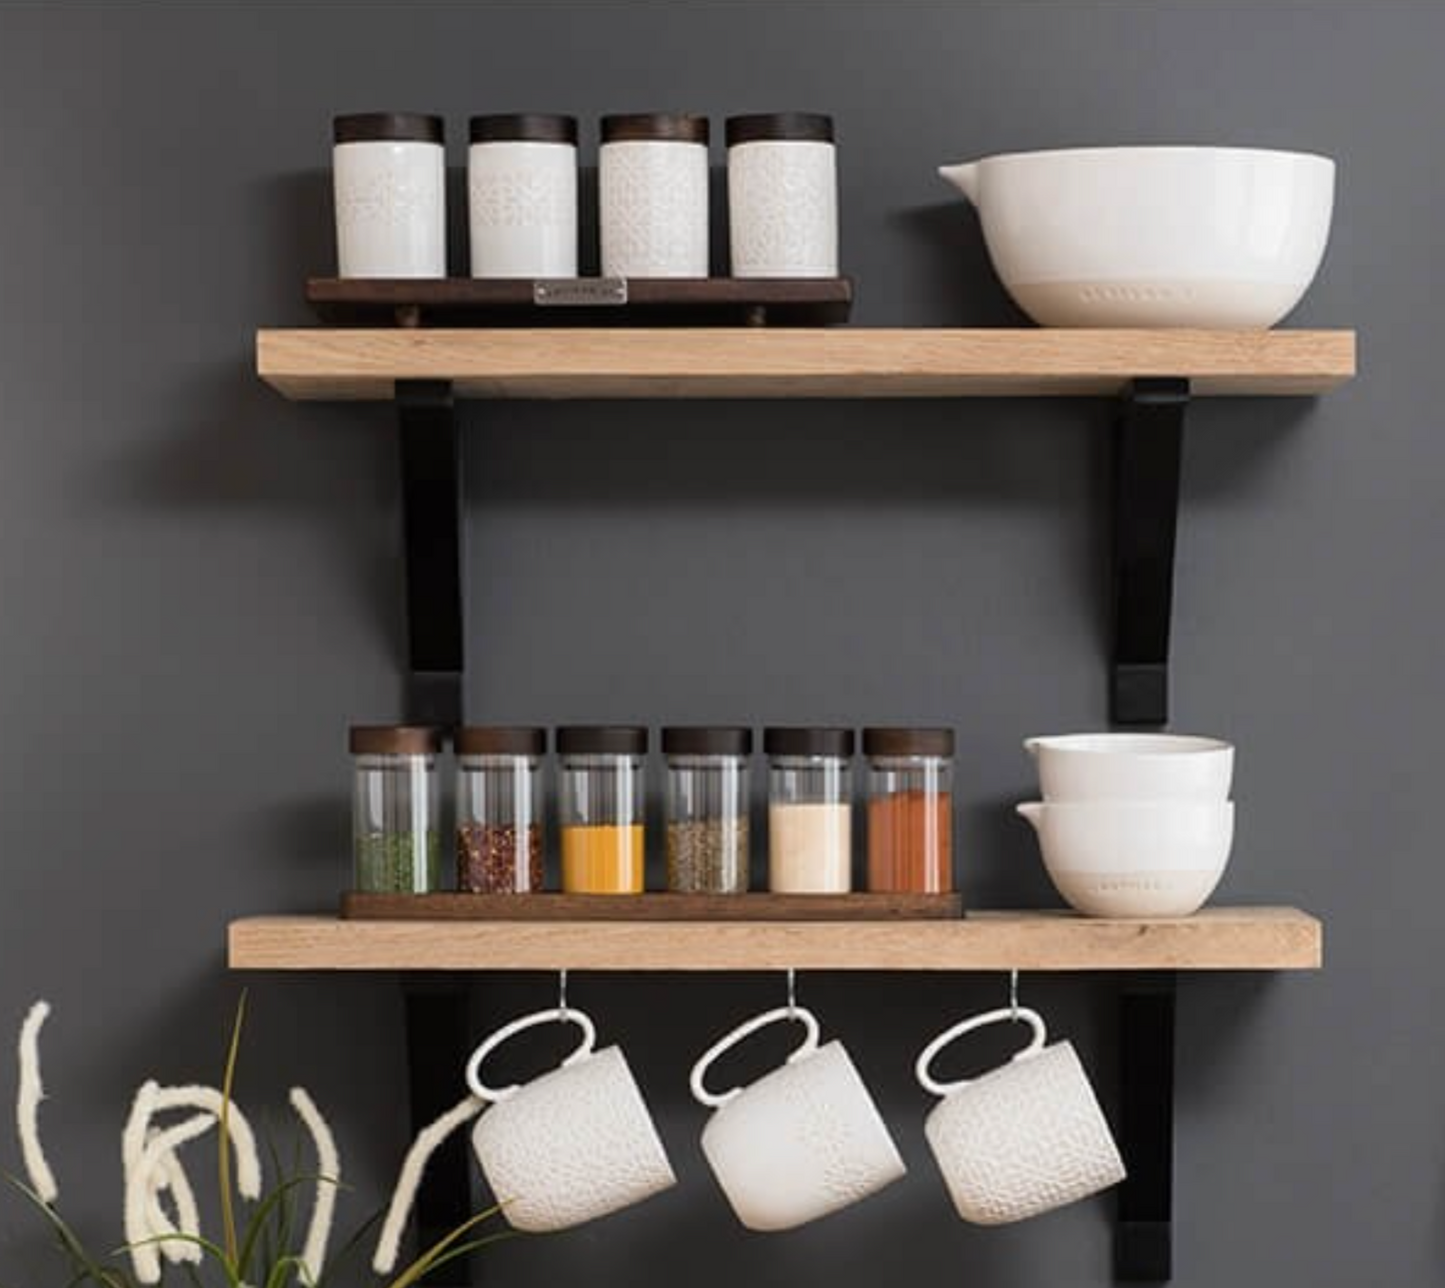 Artisan Street Mini Storage Jars (Set Of 4)